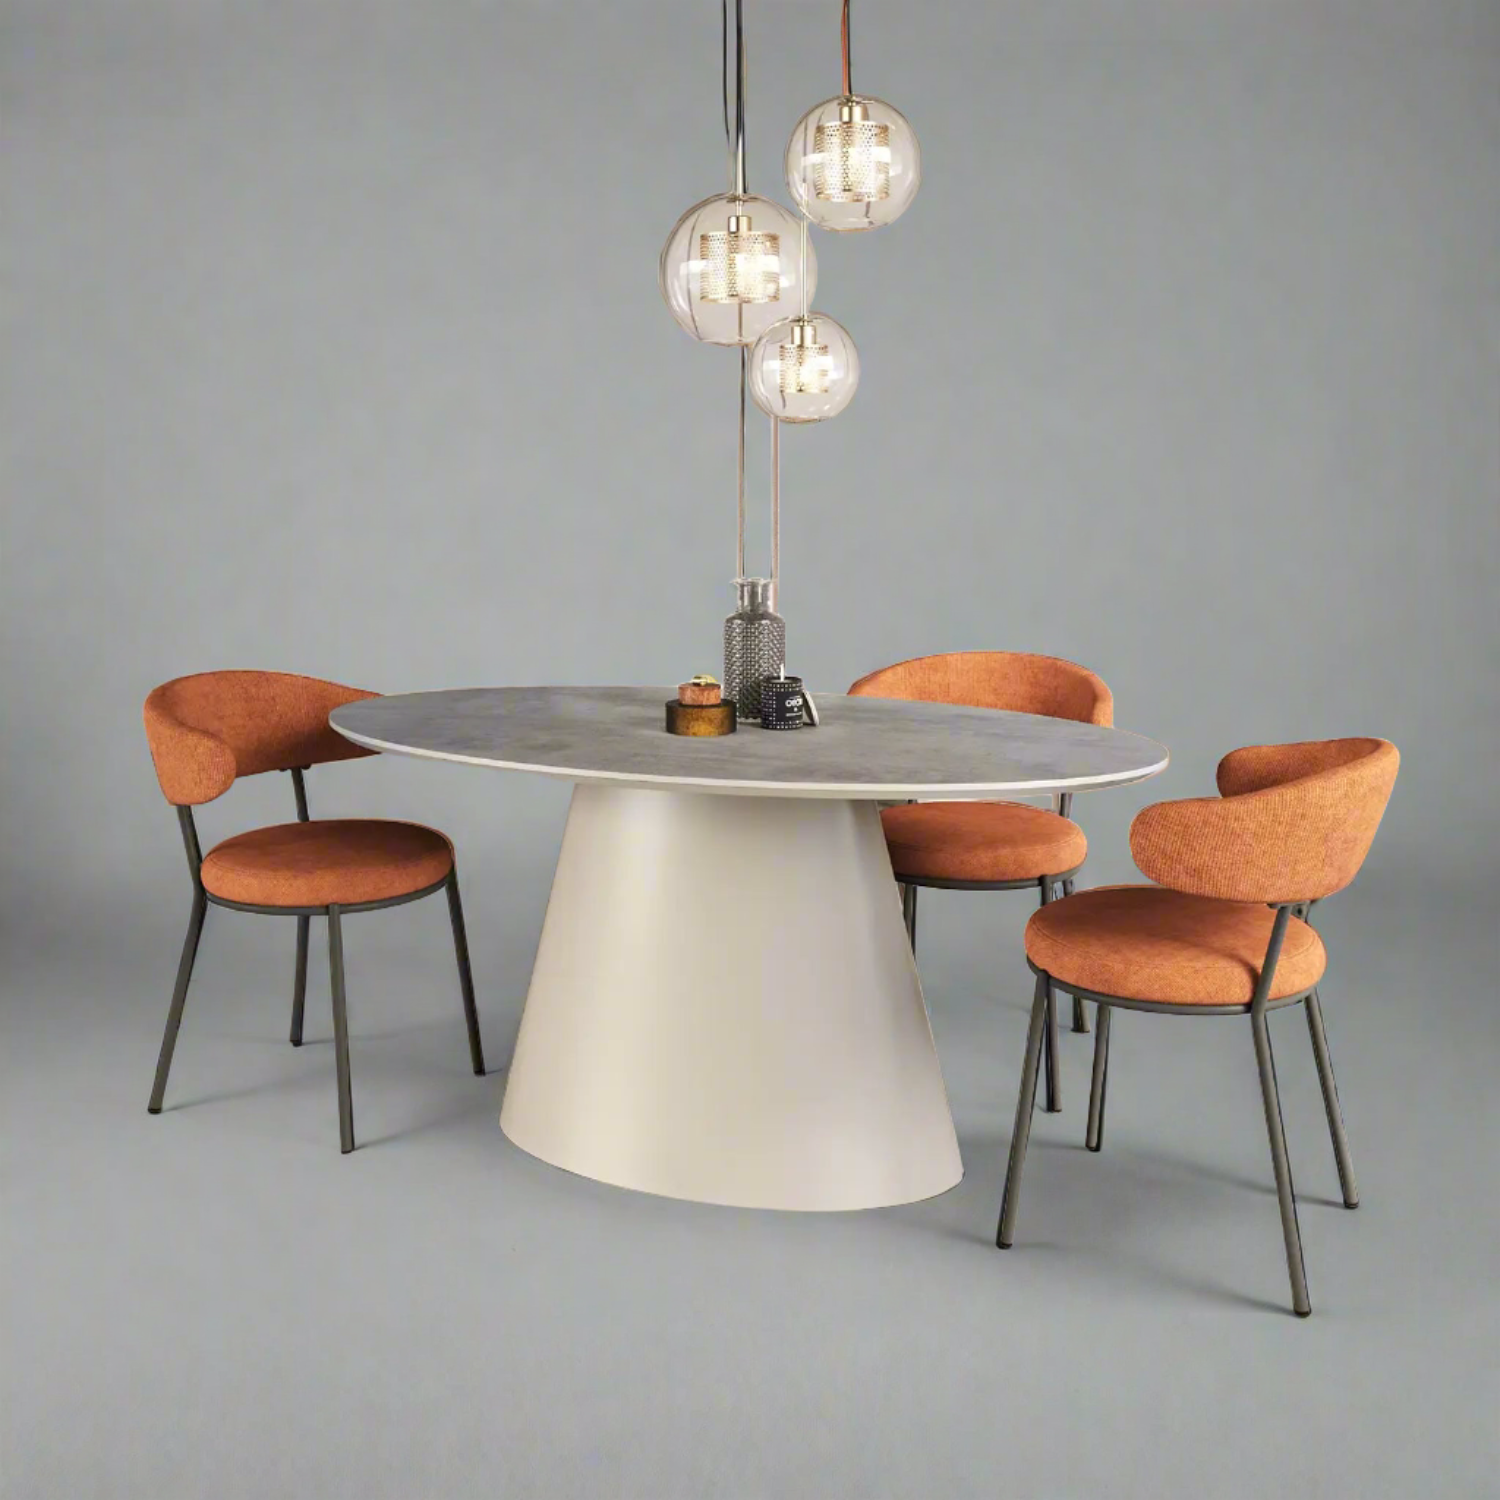 Ria 160cm Oval Light Grey Melamine Dining Table Set